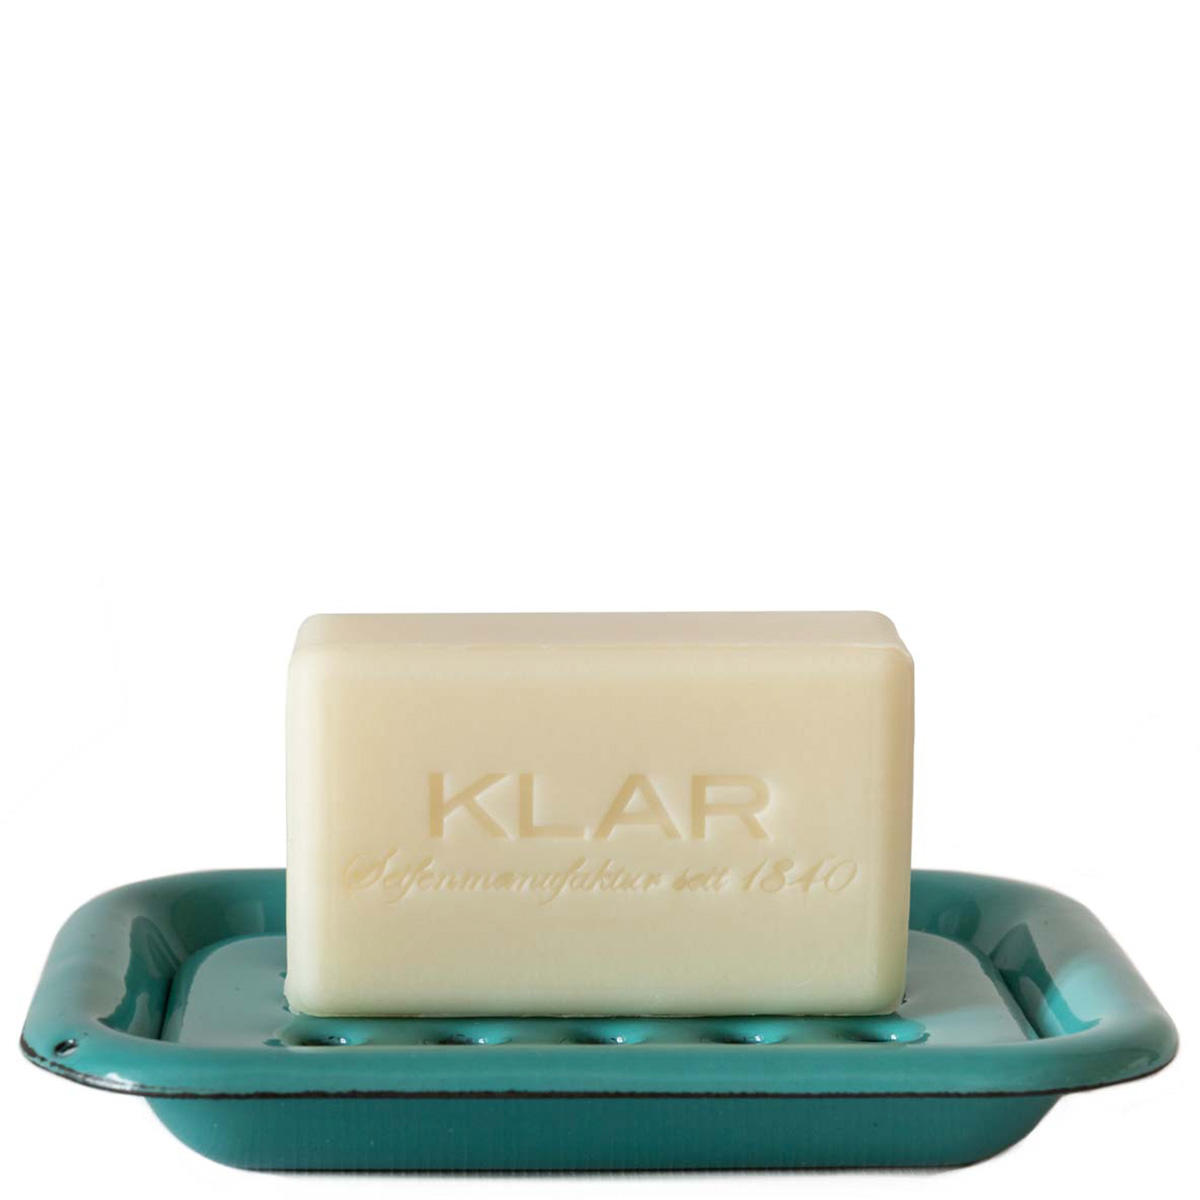 KLAR Soap dish turquoise turquoise 1 piece - 2